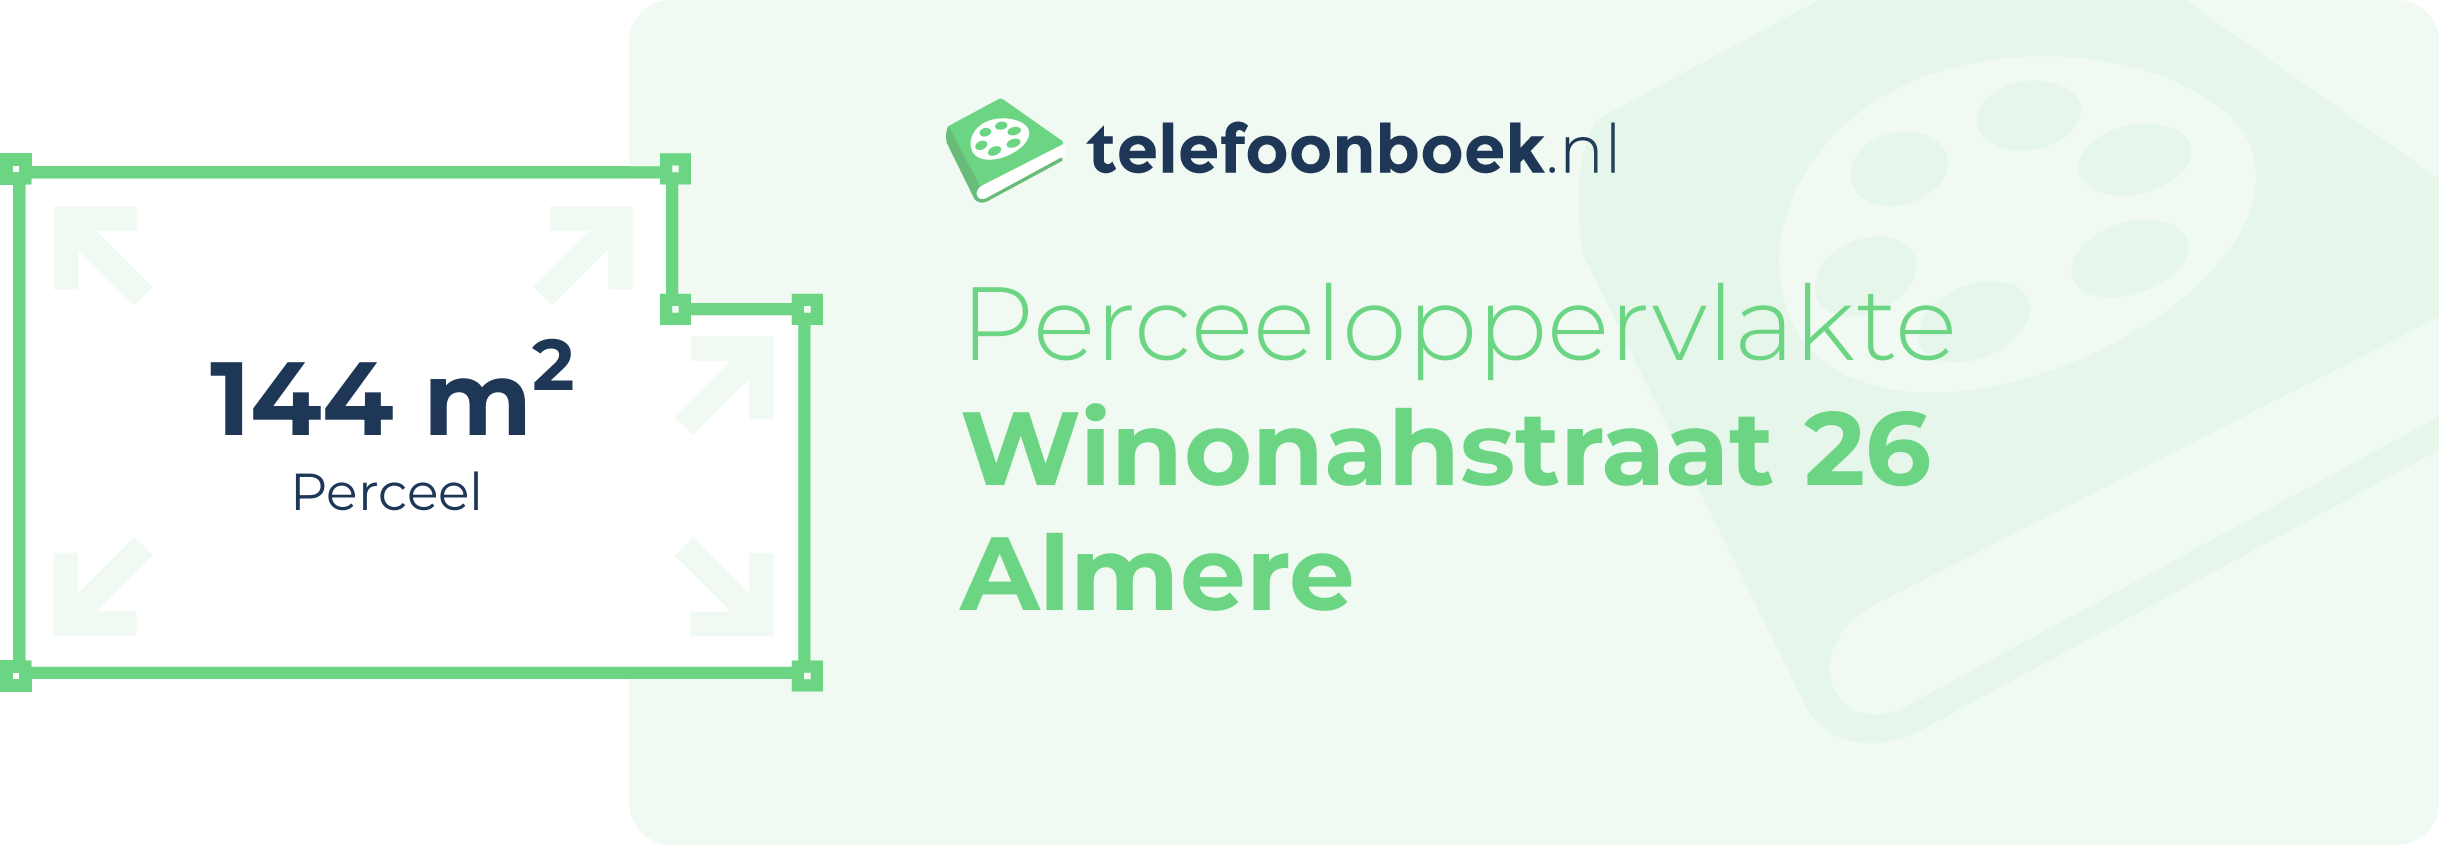 Perceeloppervlakte Winonahstraat 26 Almere